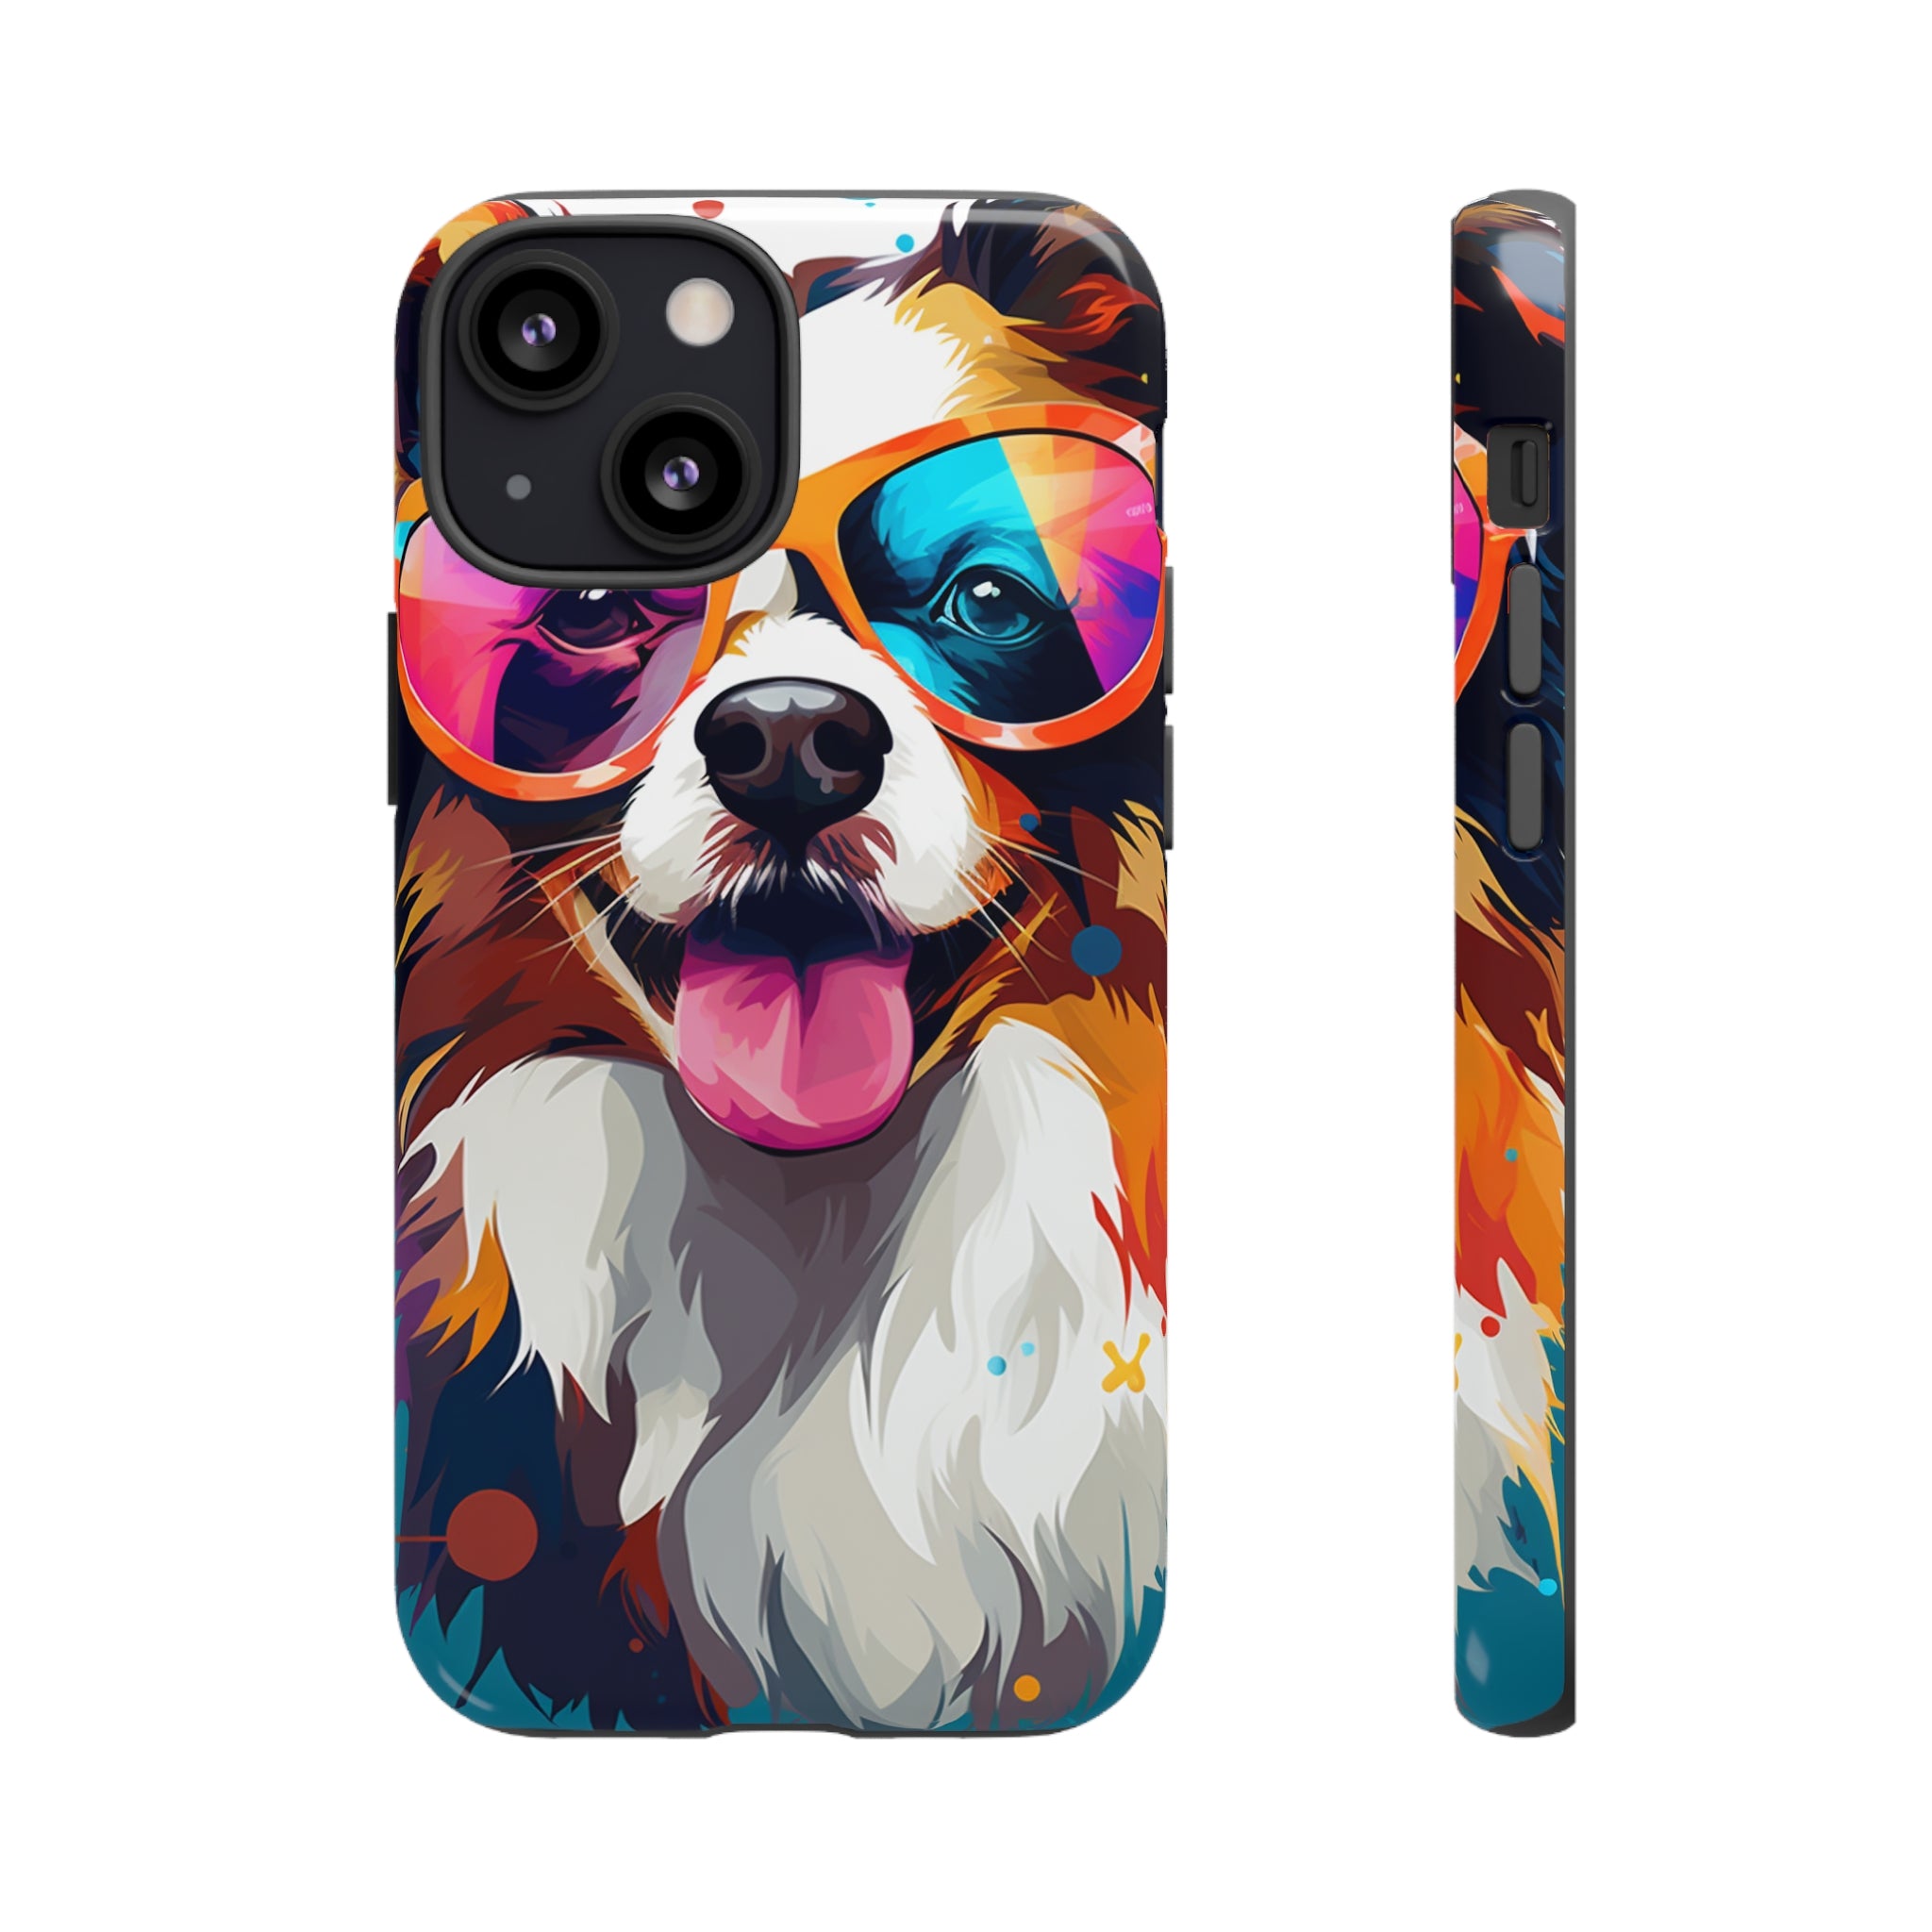 The Fashion Dog Co. Phone Case